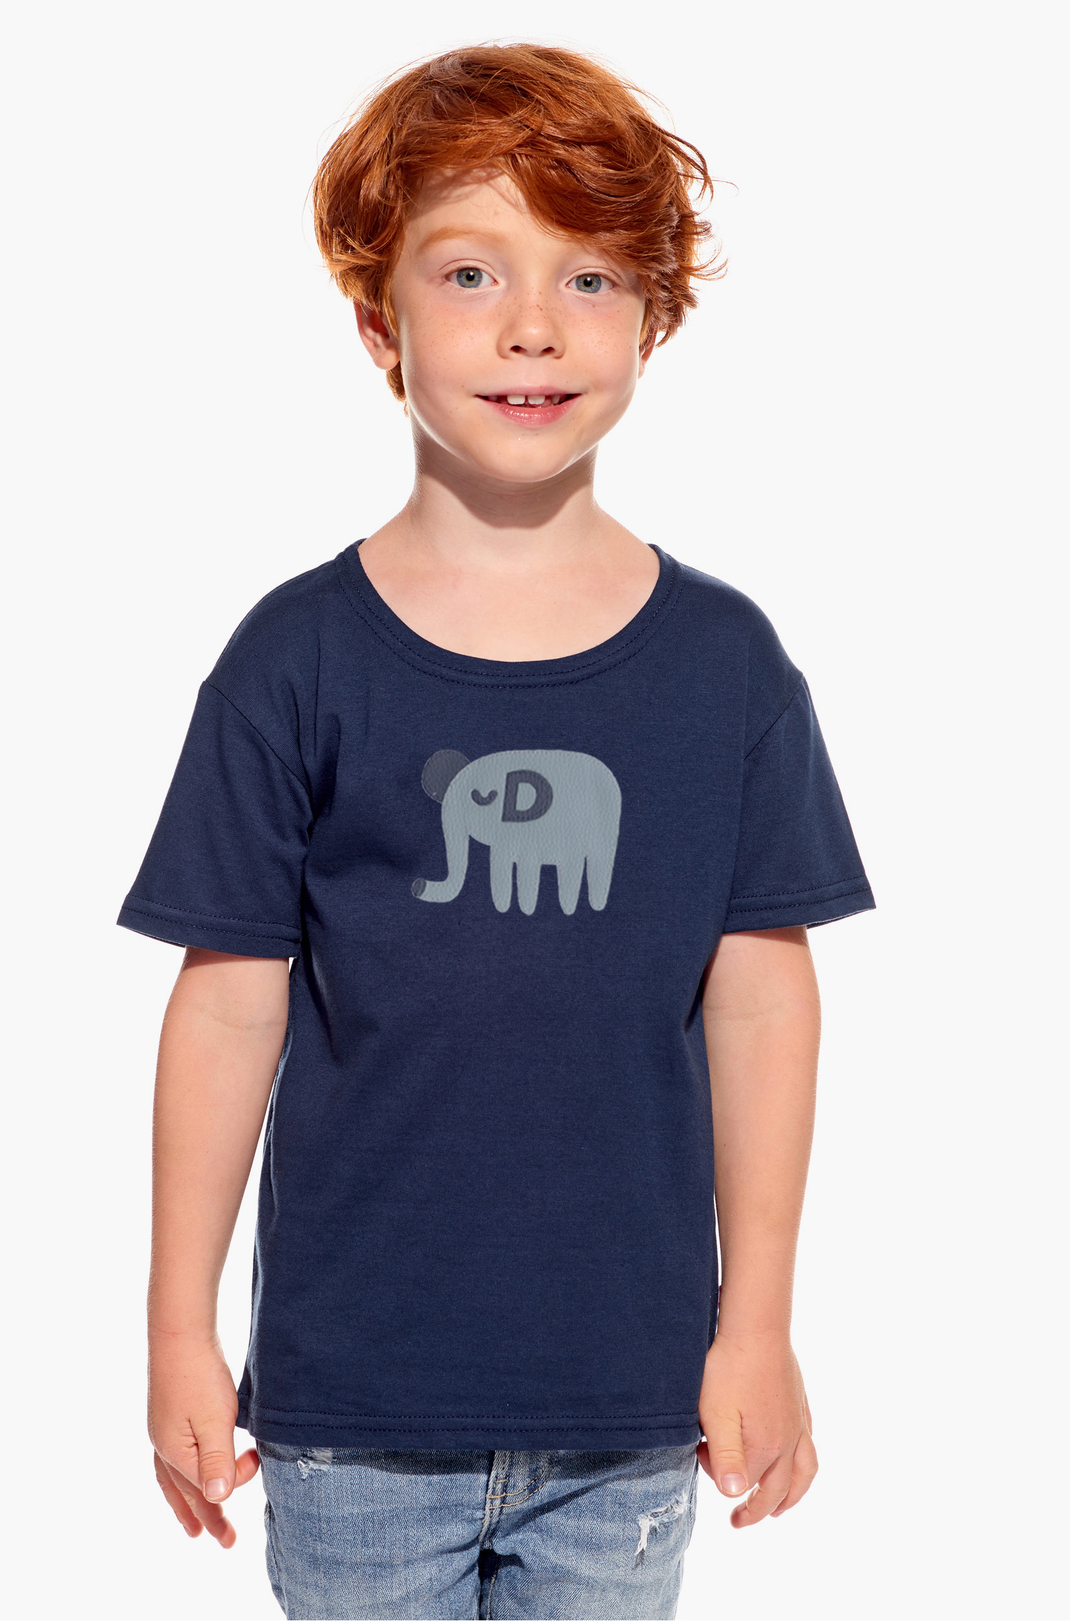 Shirt with an elephant